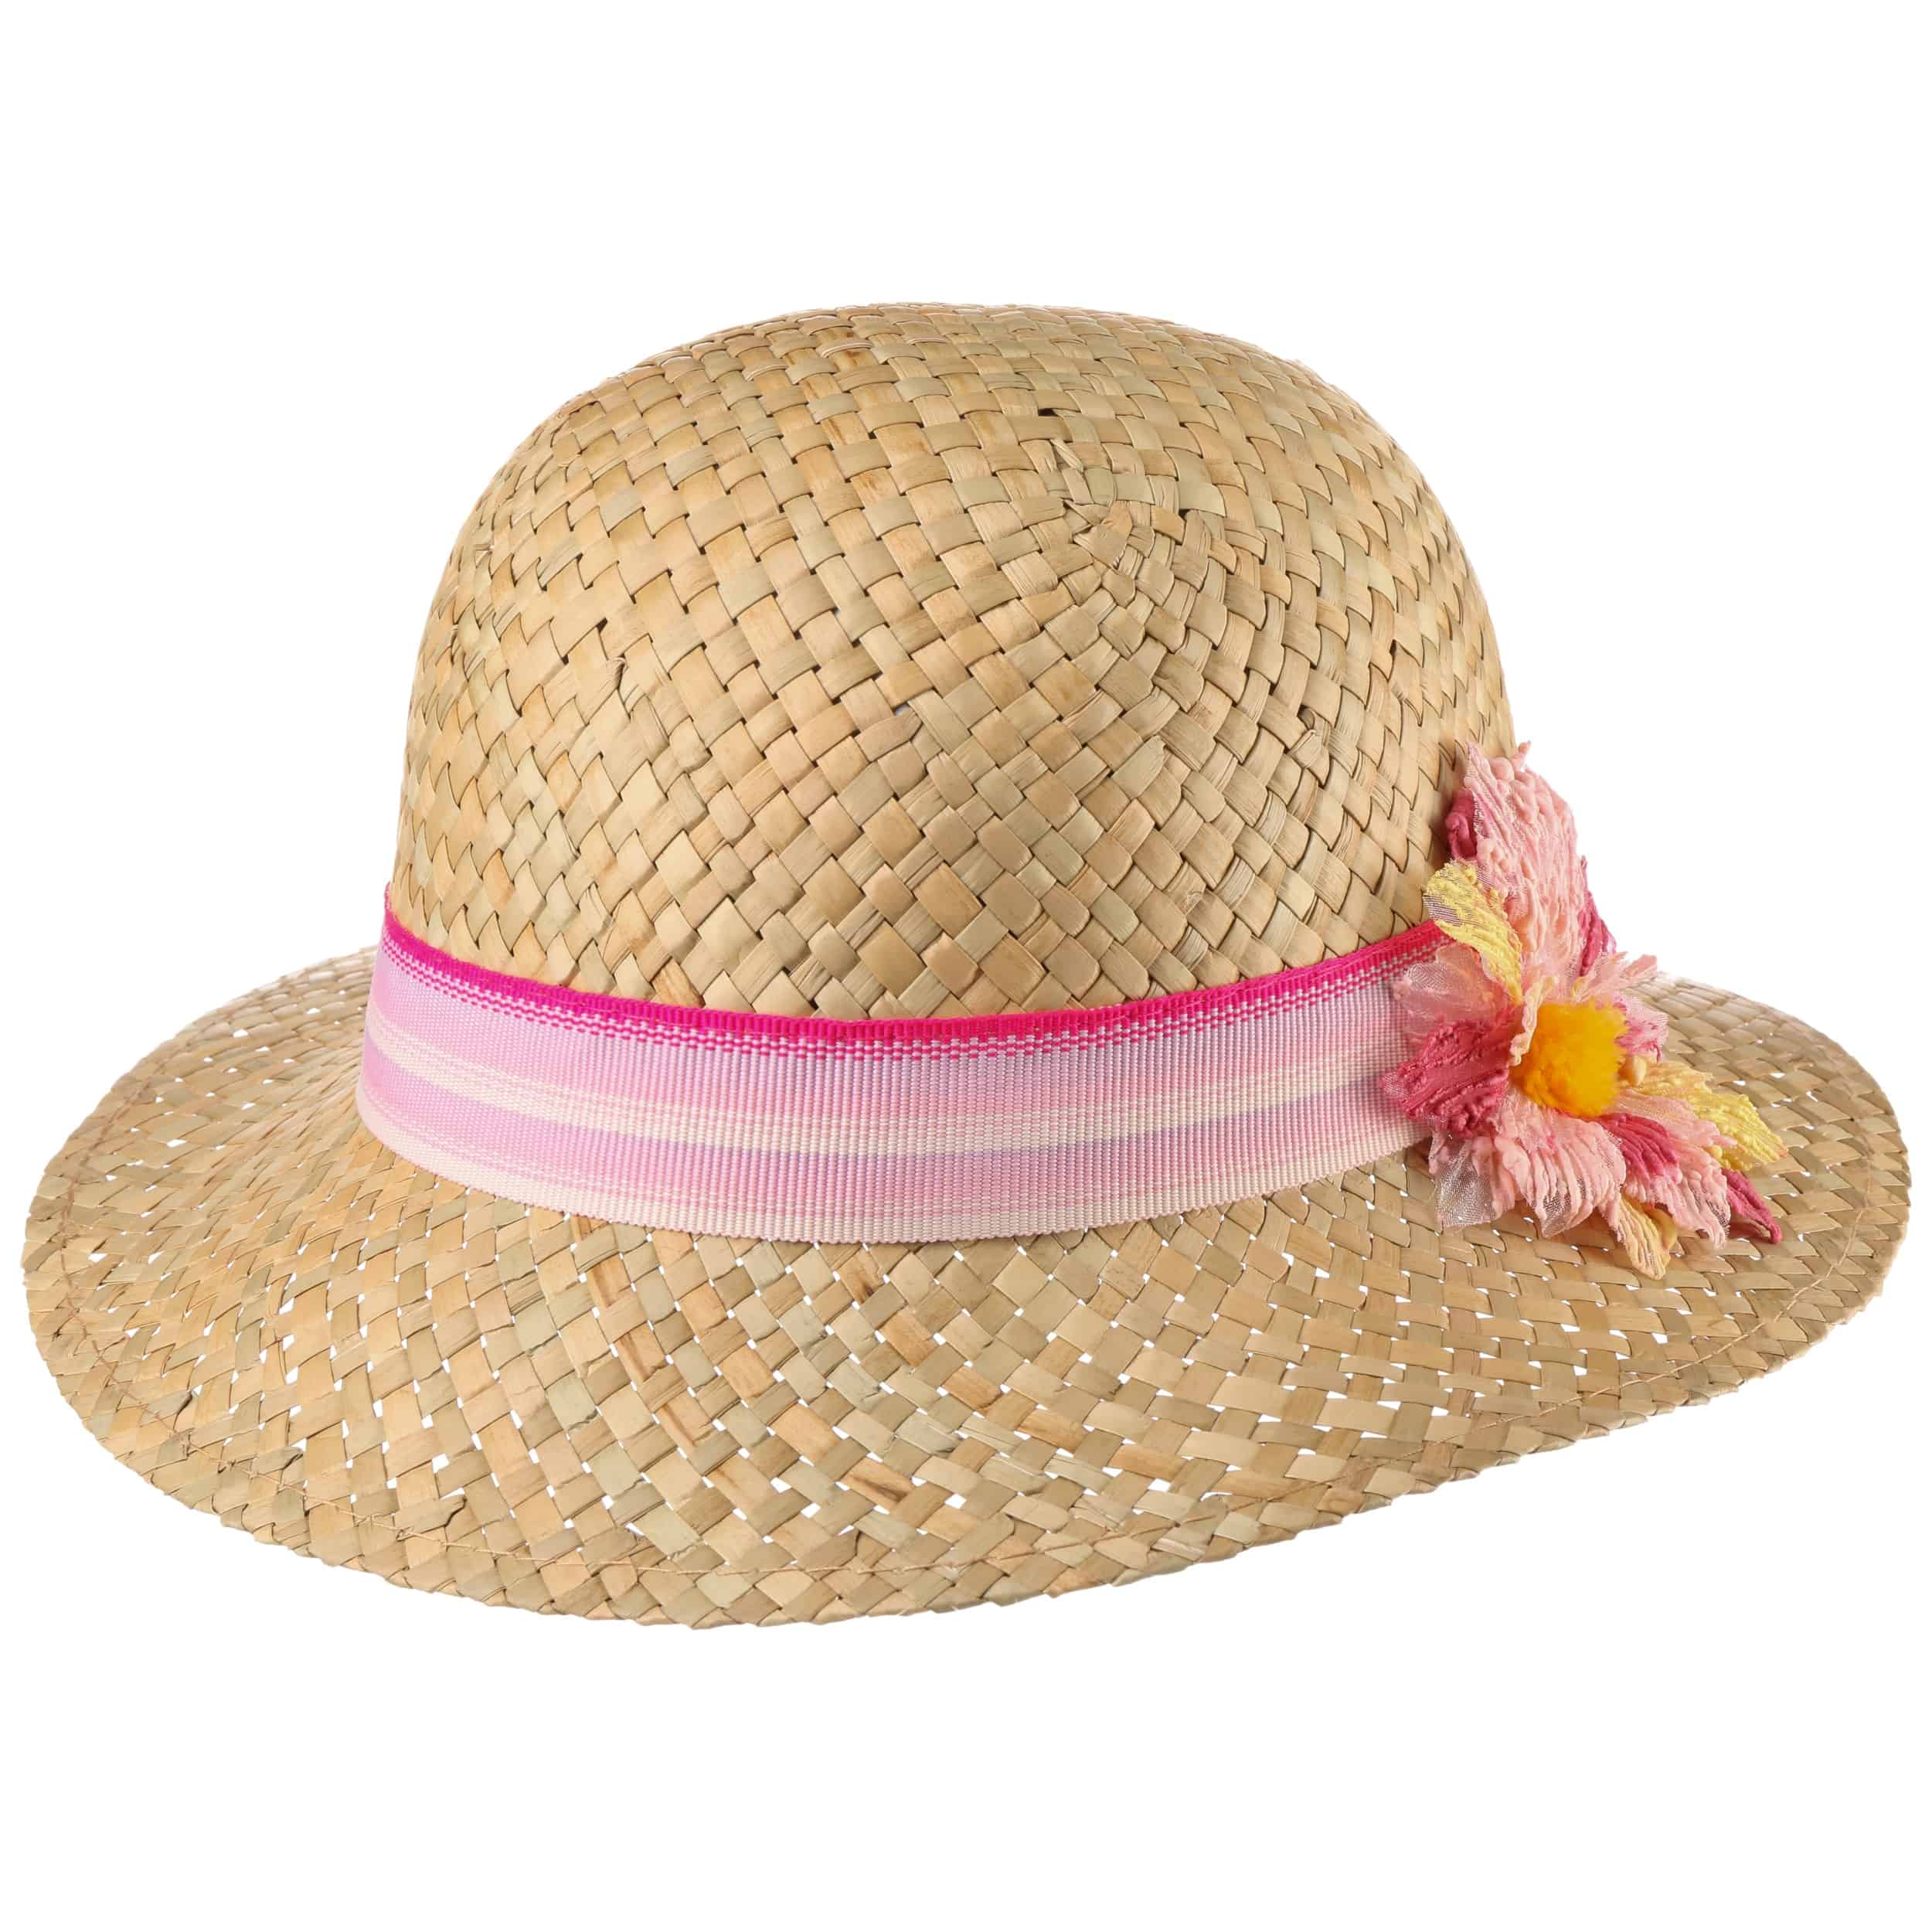 high quality straw hats